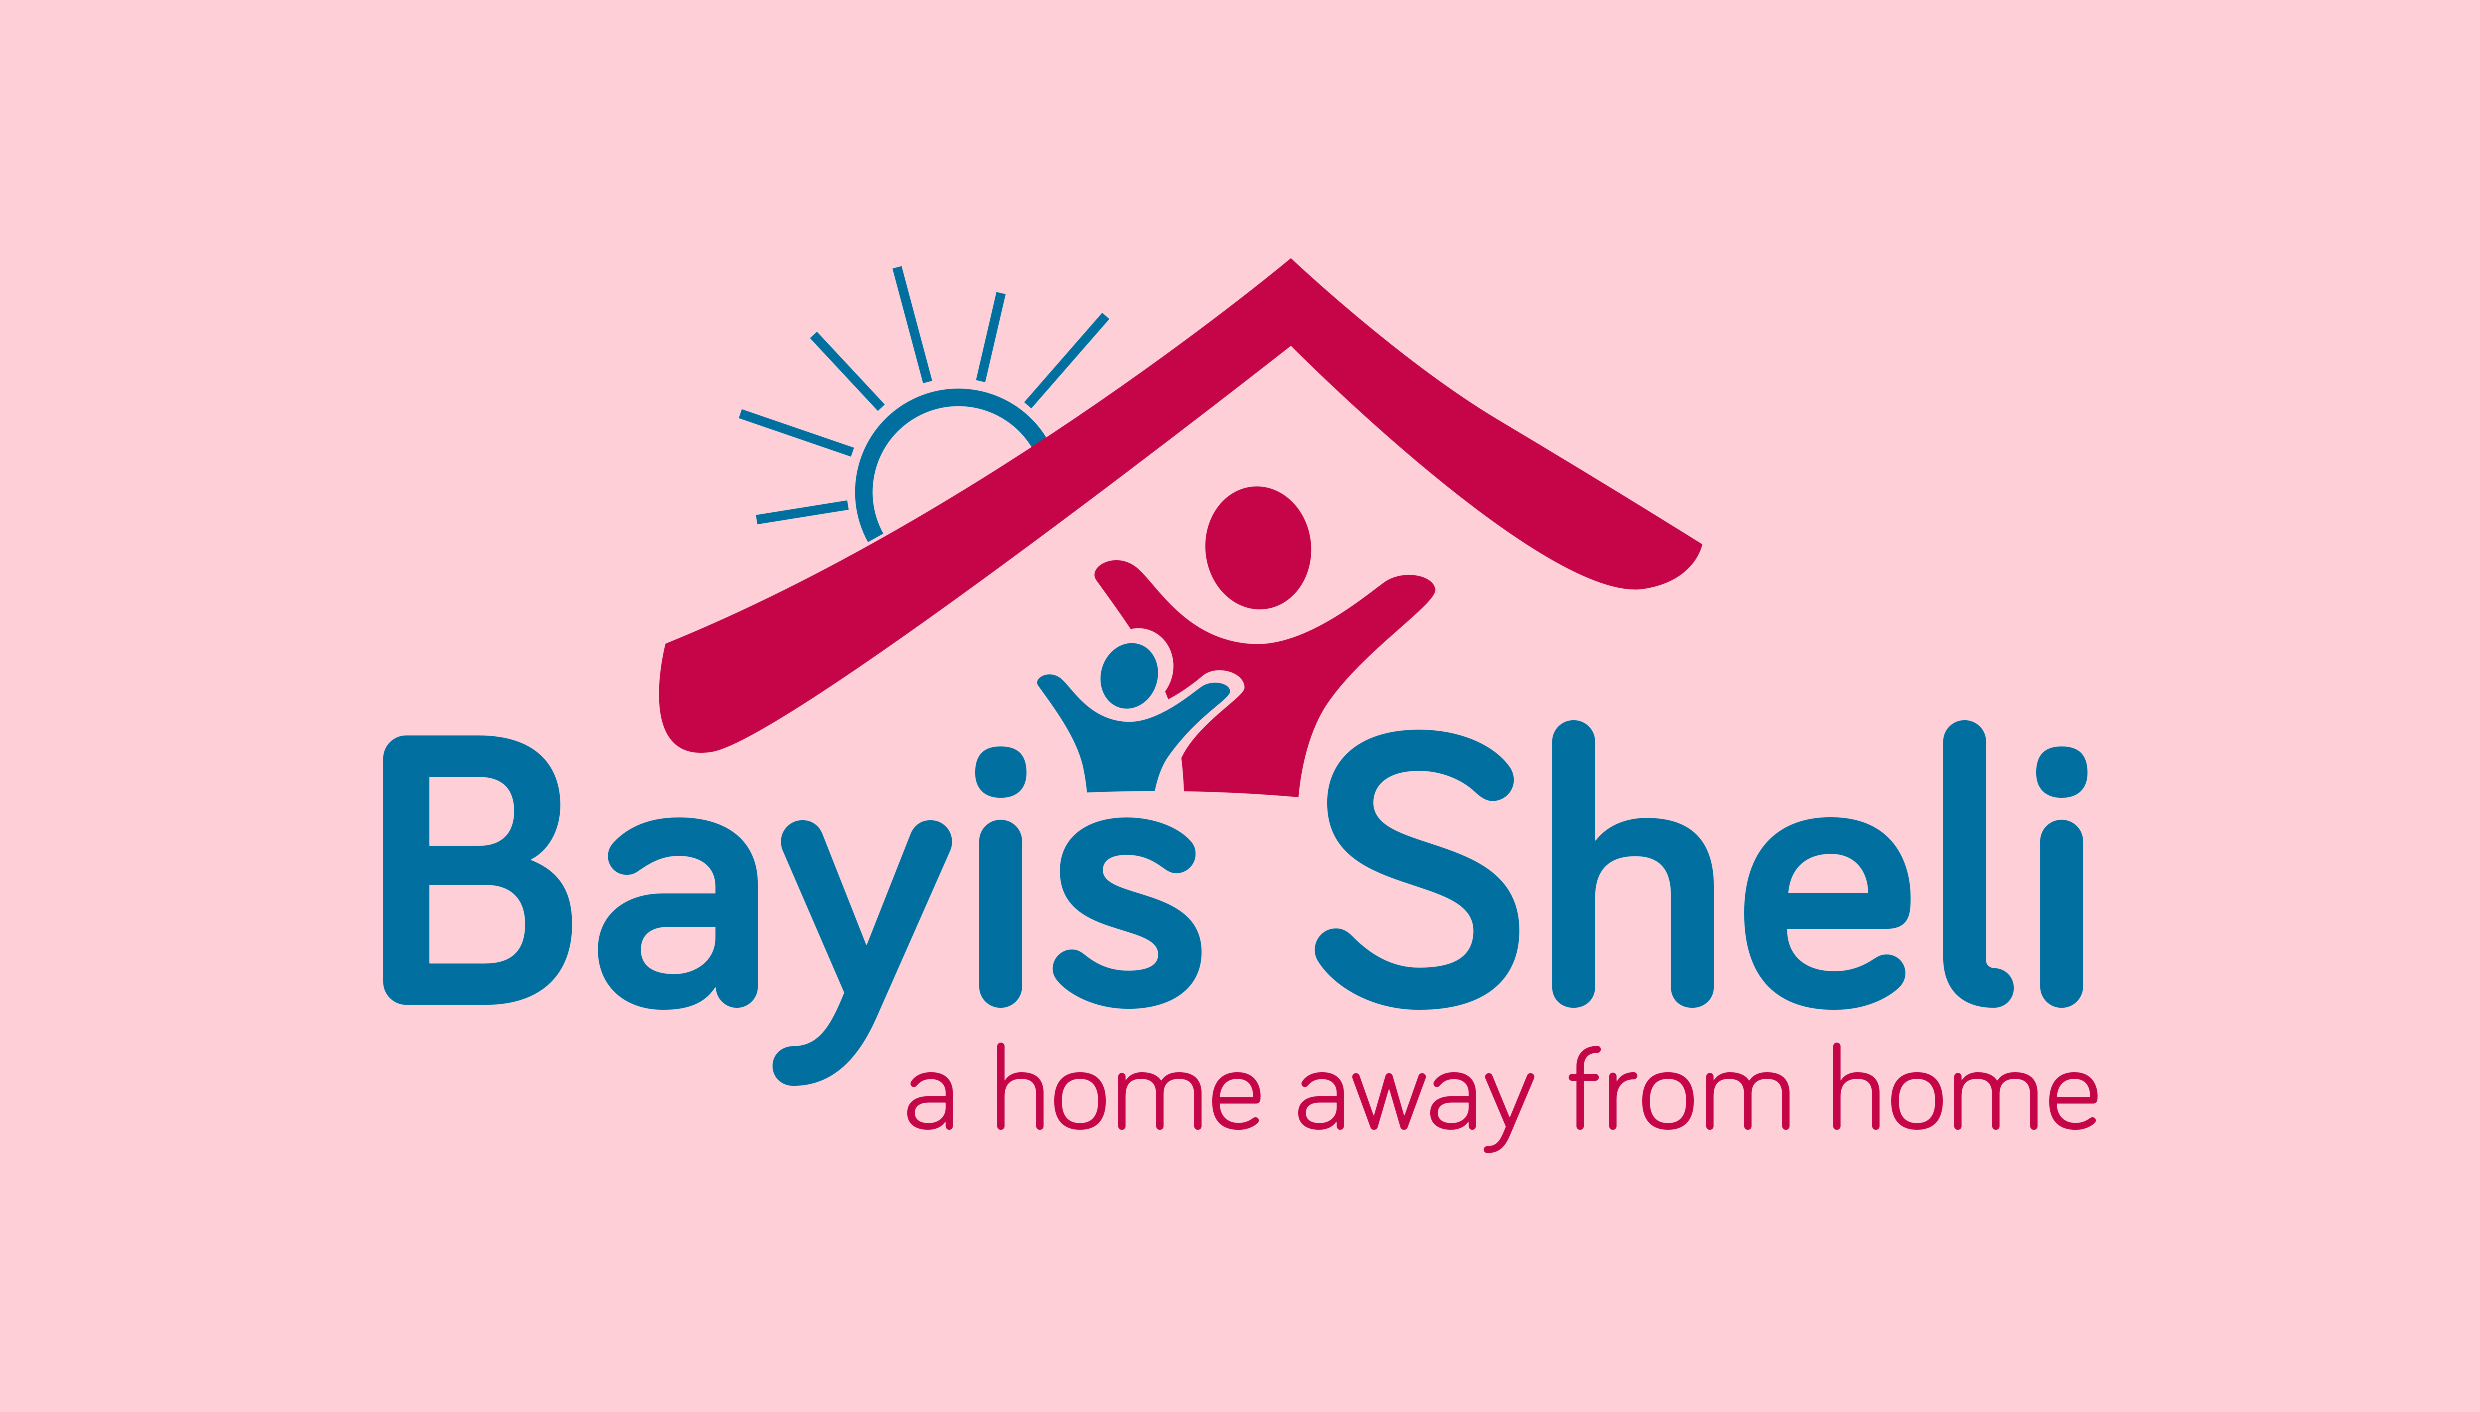 Bayis Sheli logo pink